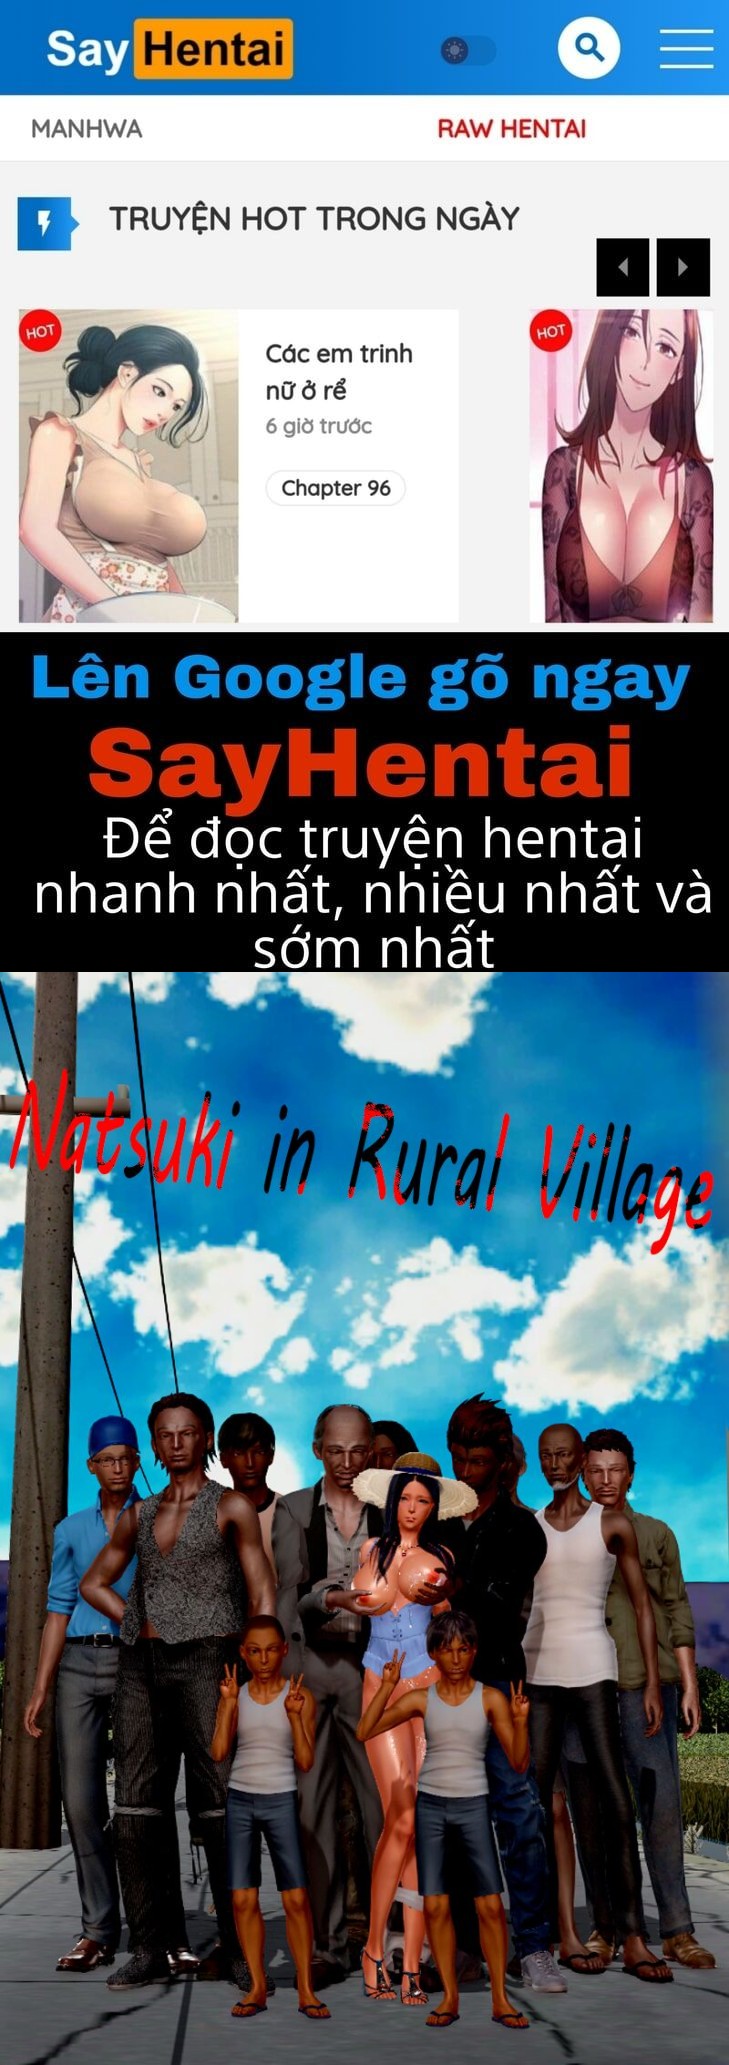 Natsuki in Rural Village Chương 1 Trang 1